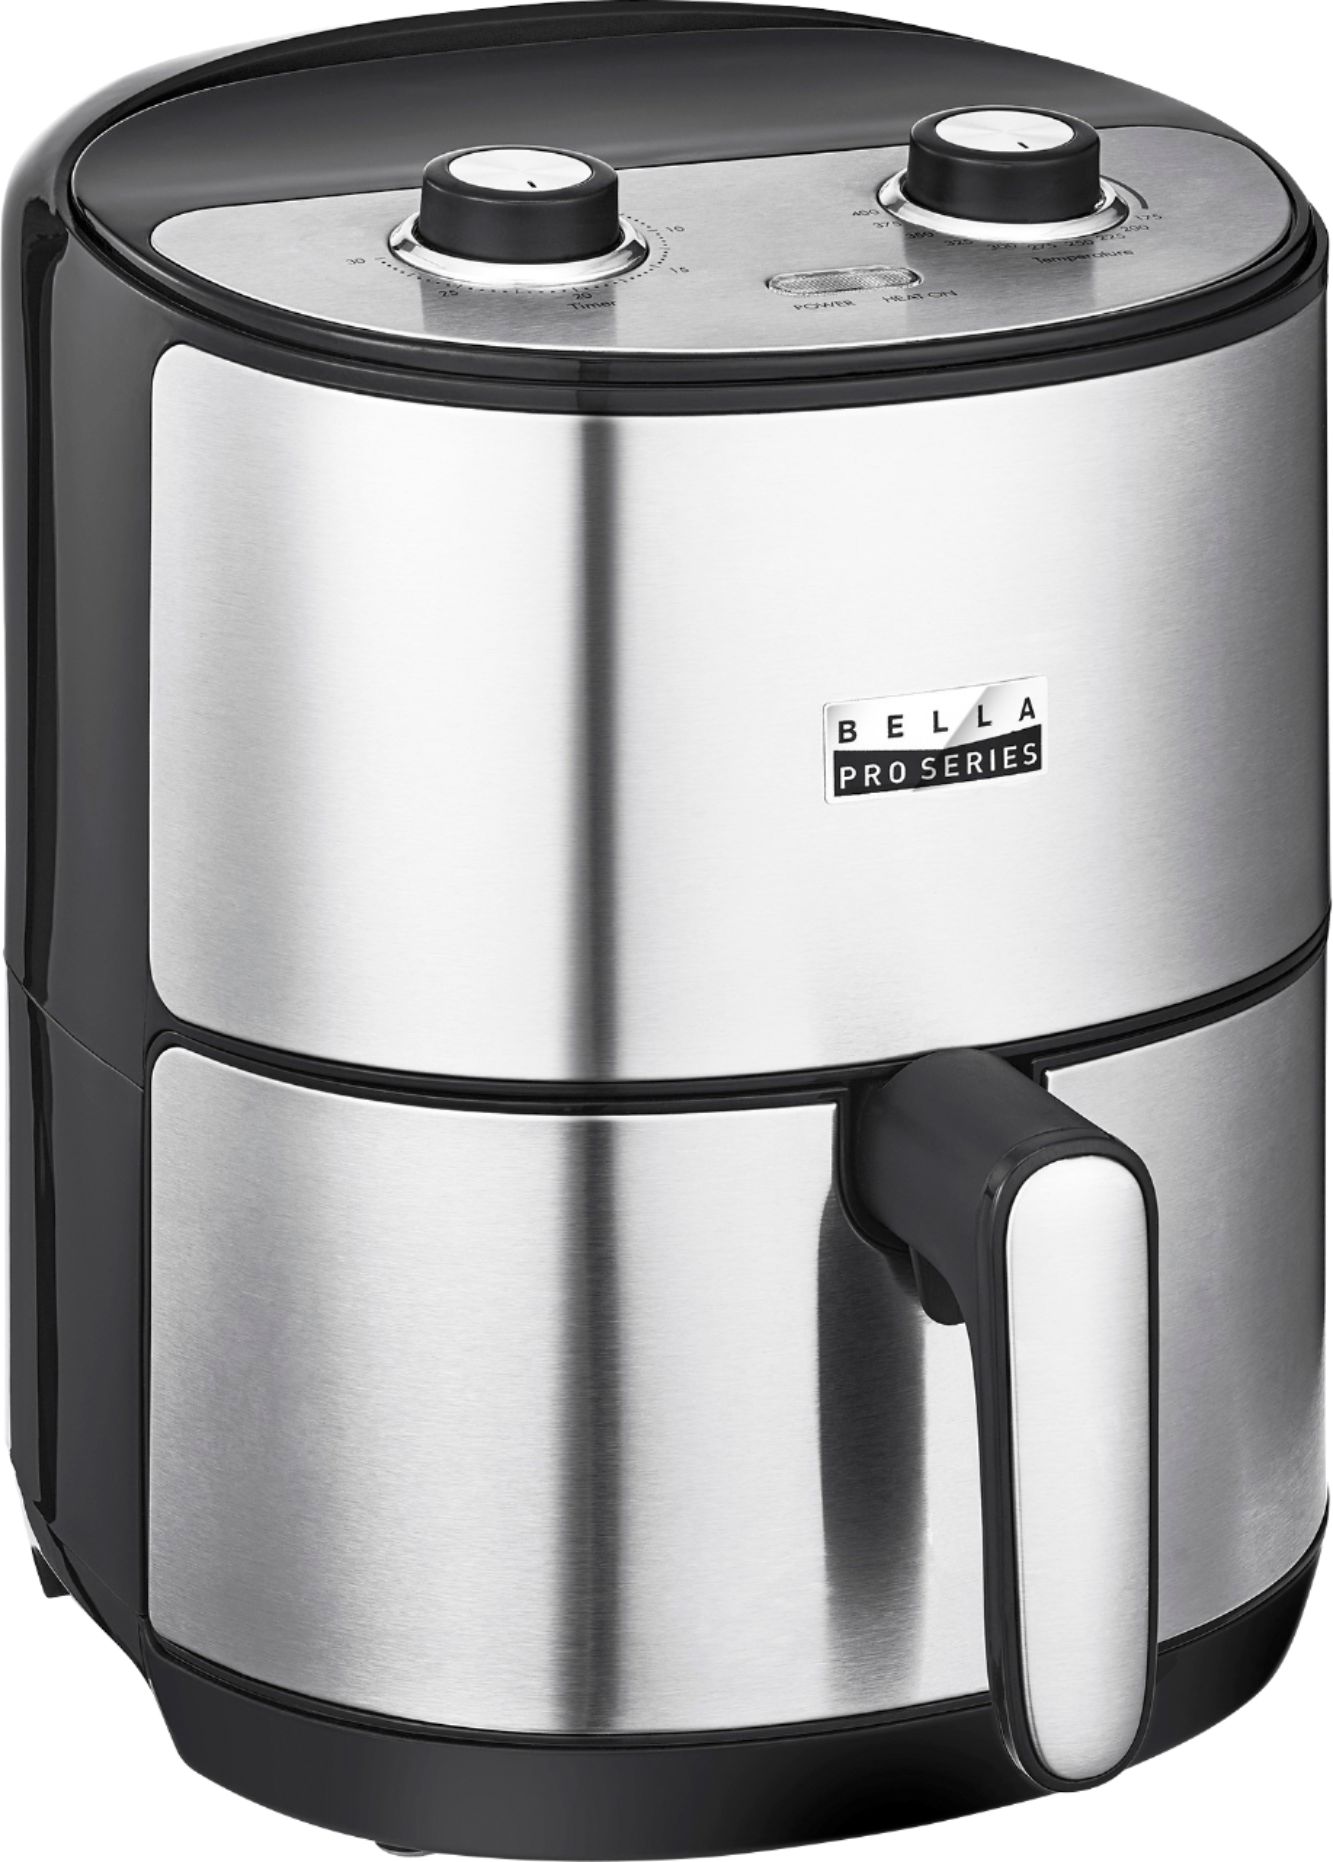 Bella Pro Series Air Fryer - appliances - by owner - sale - craigslist